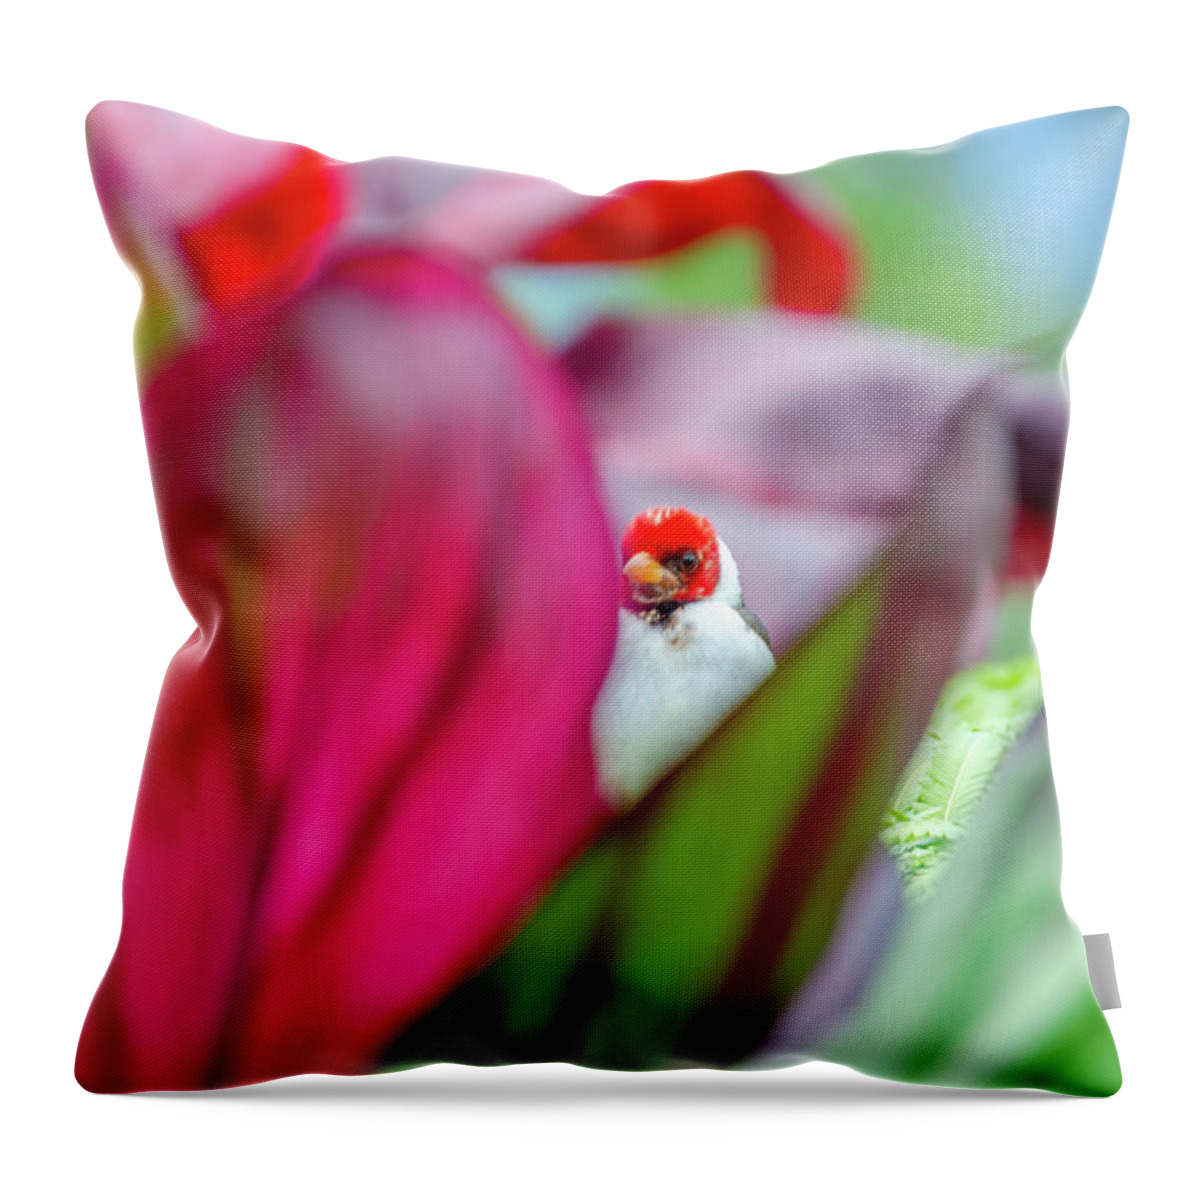 Bird Throw Pillow featuring the photograph Peeking between the leaves by Daniel Murphy